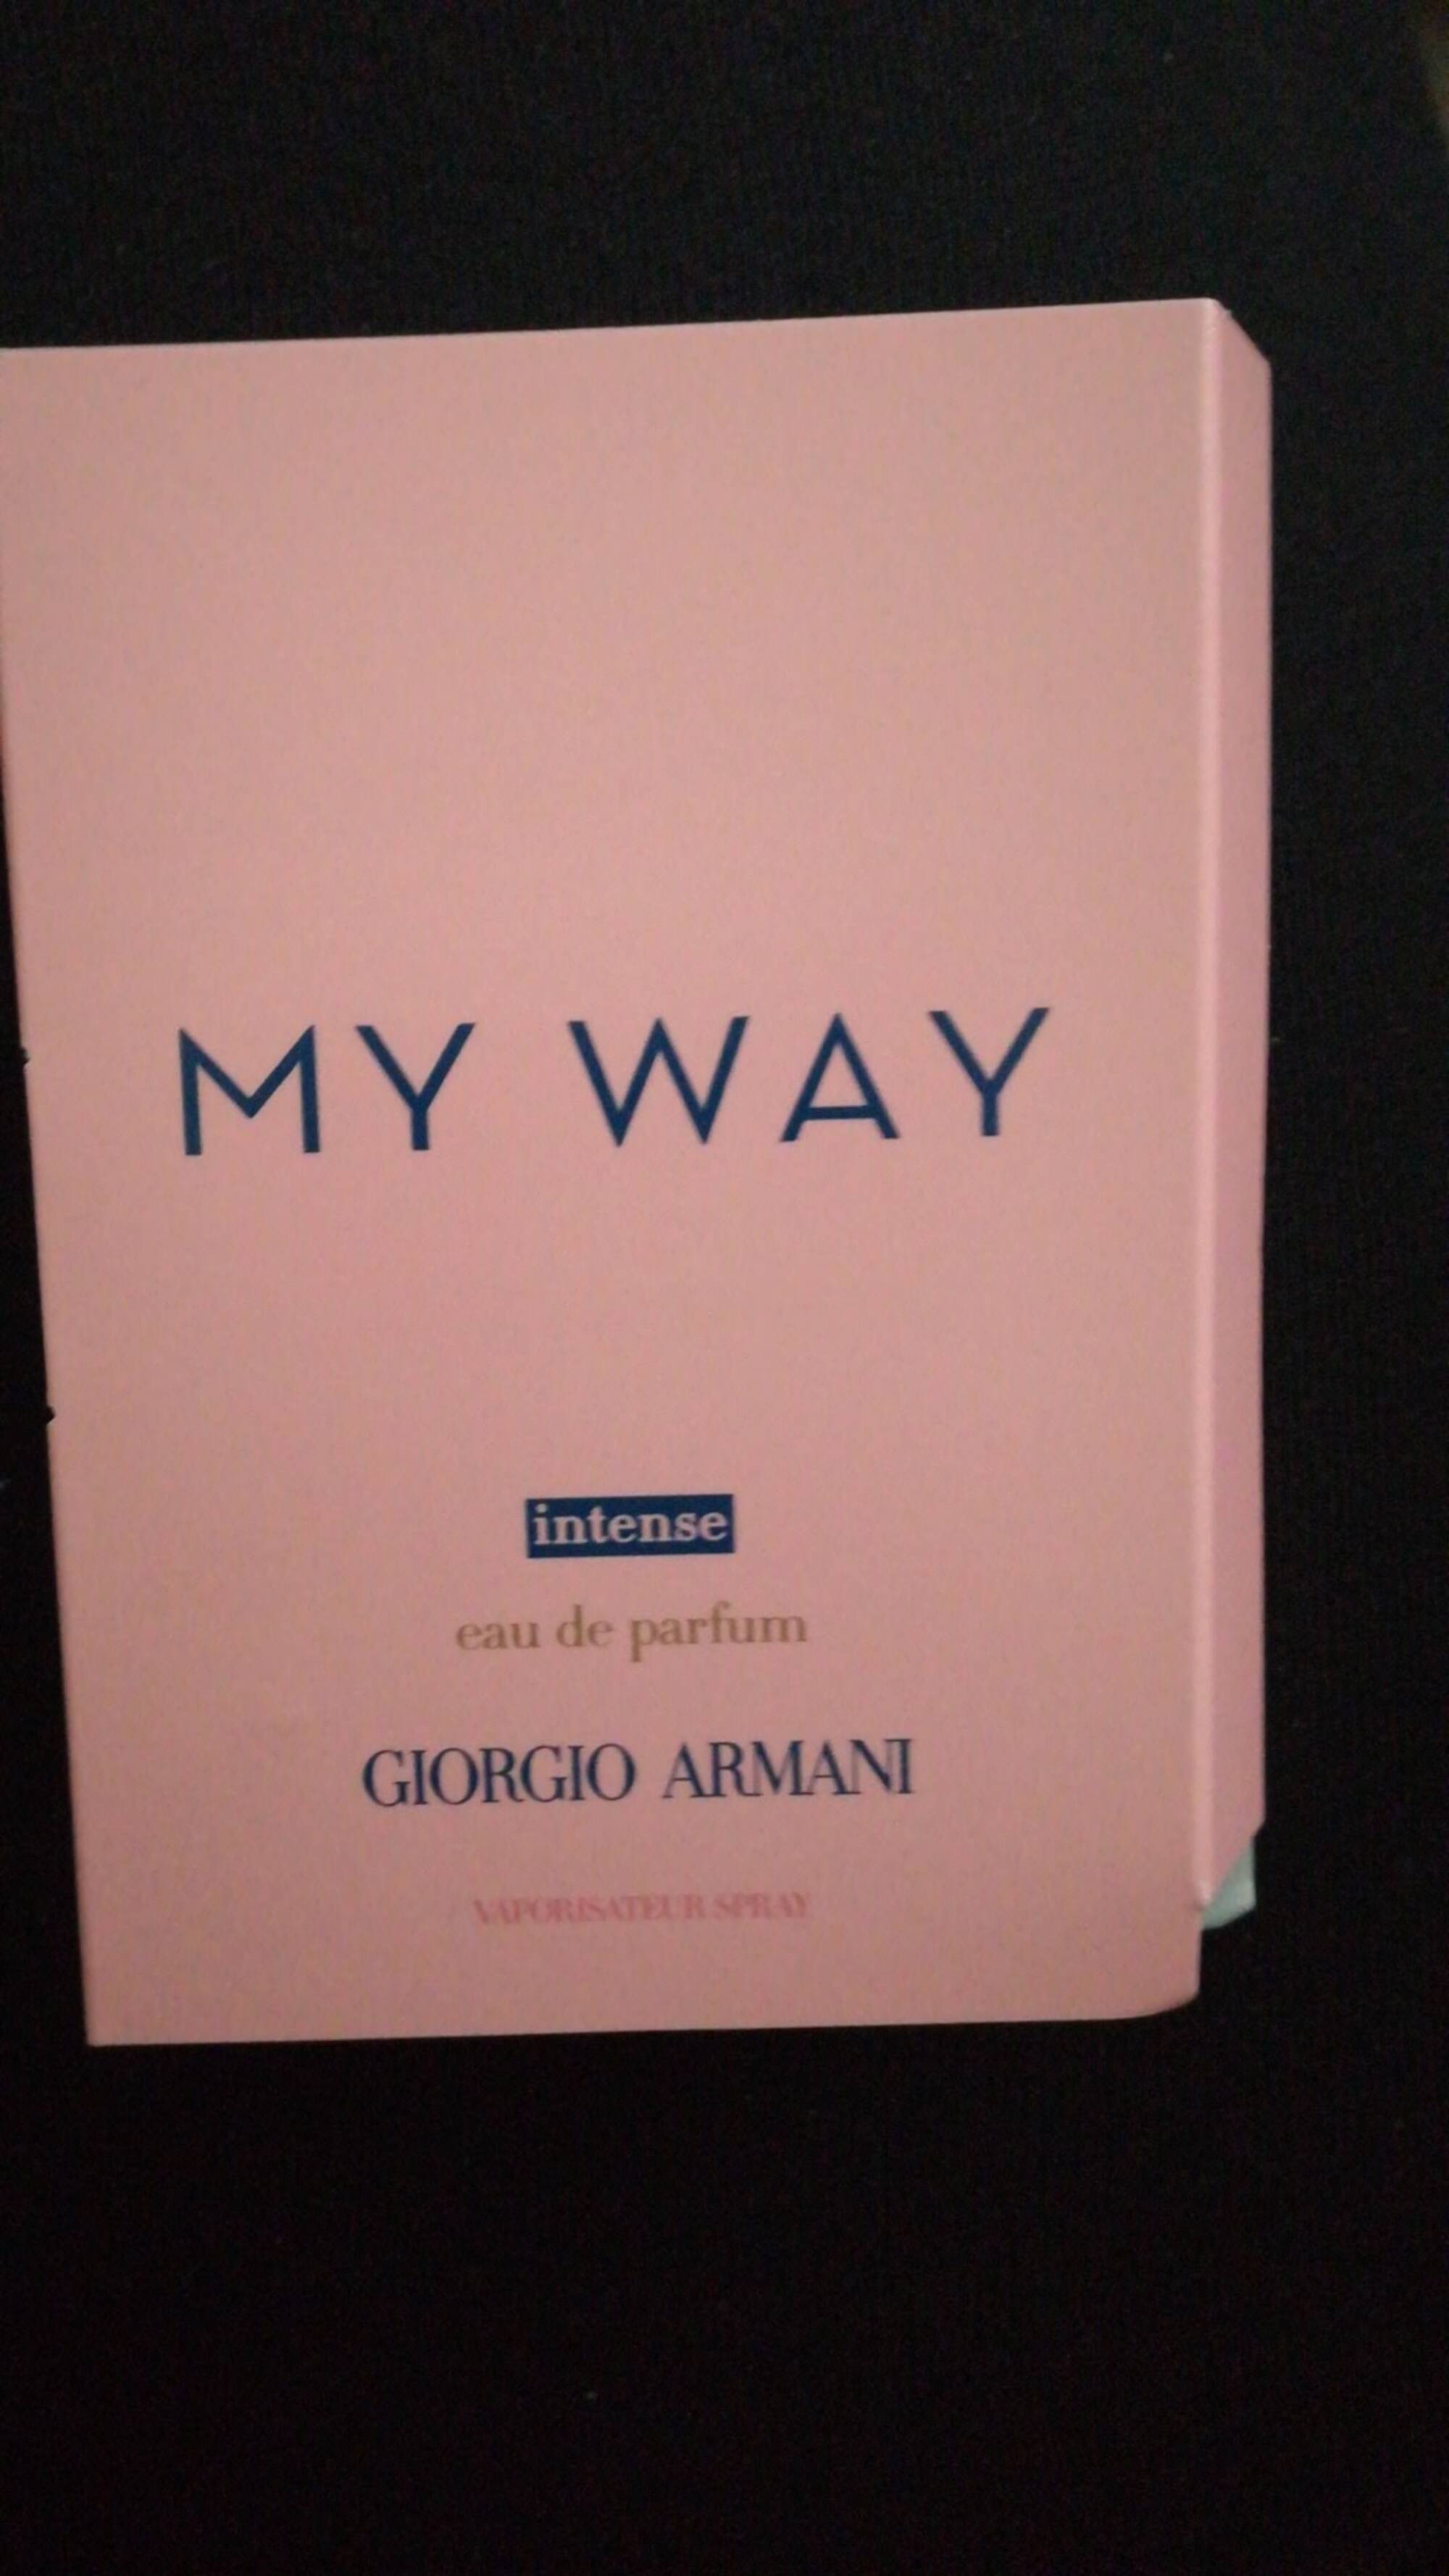 GIORGIO ARMANI - My way - Eau de parfum intense